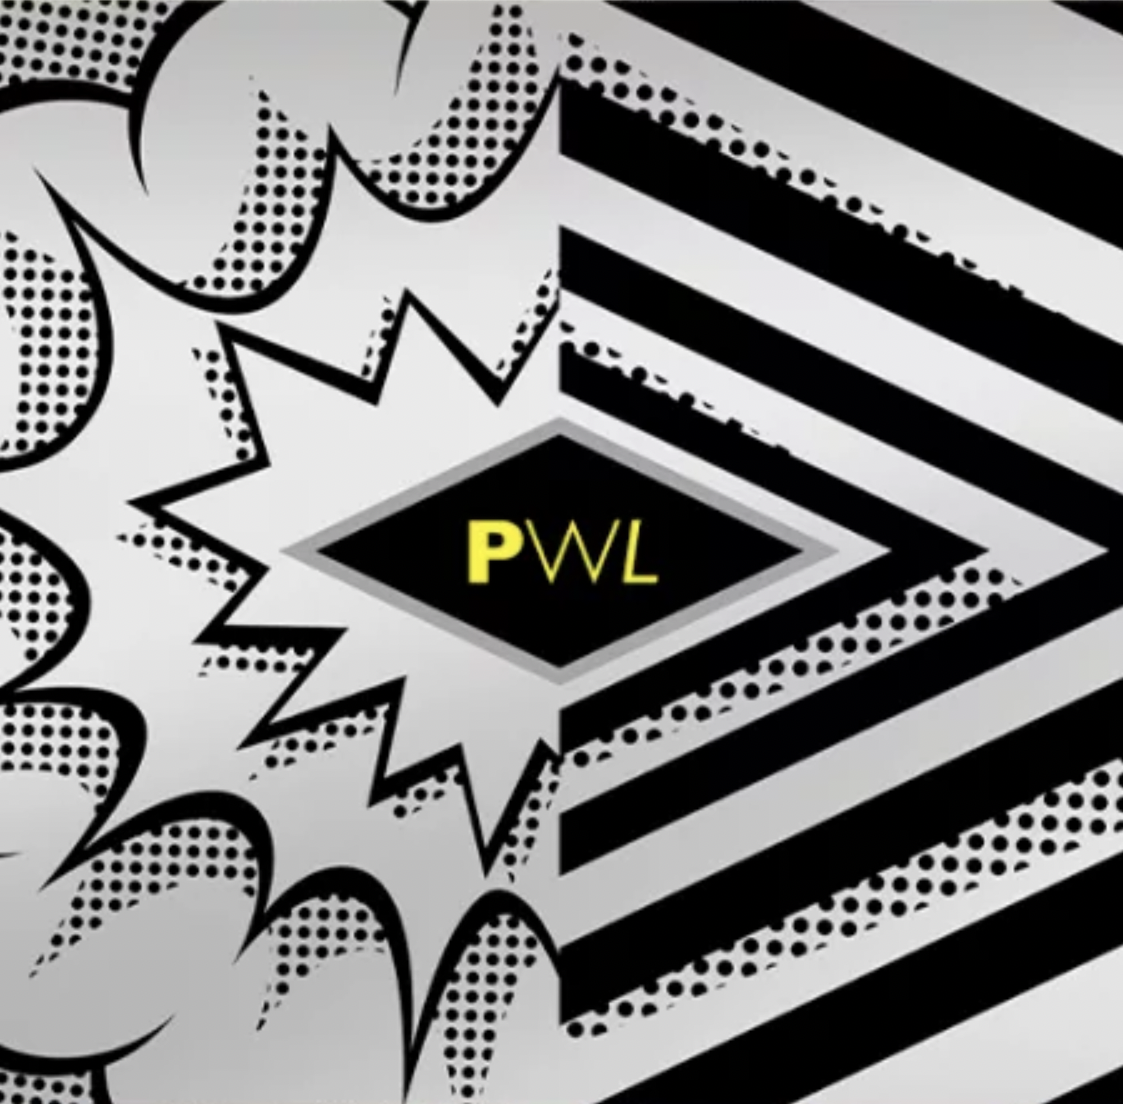 PWL Extended: Big Hits & Surprises, Vol. 1&2